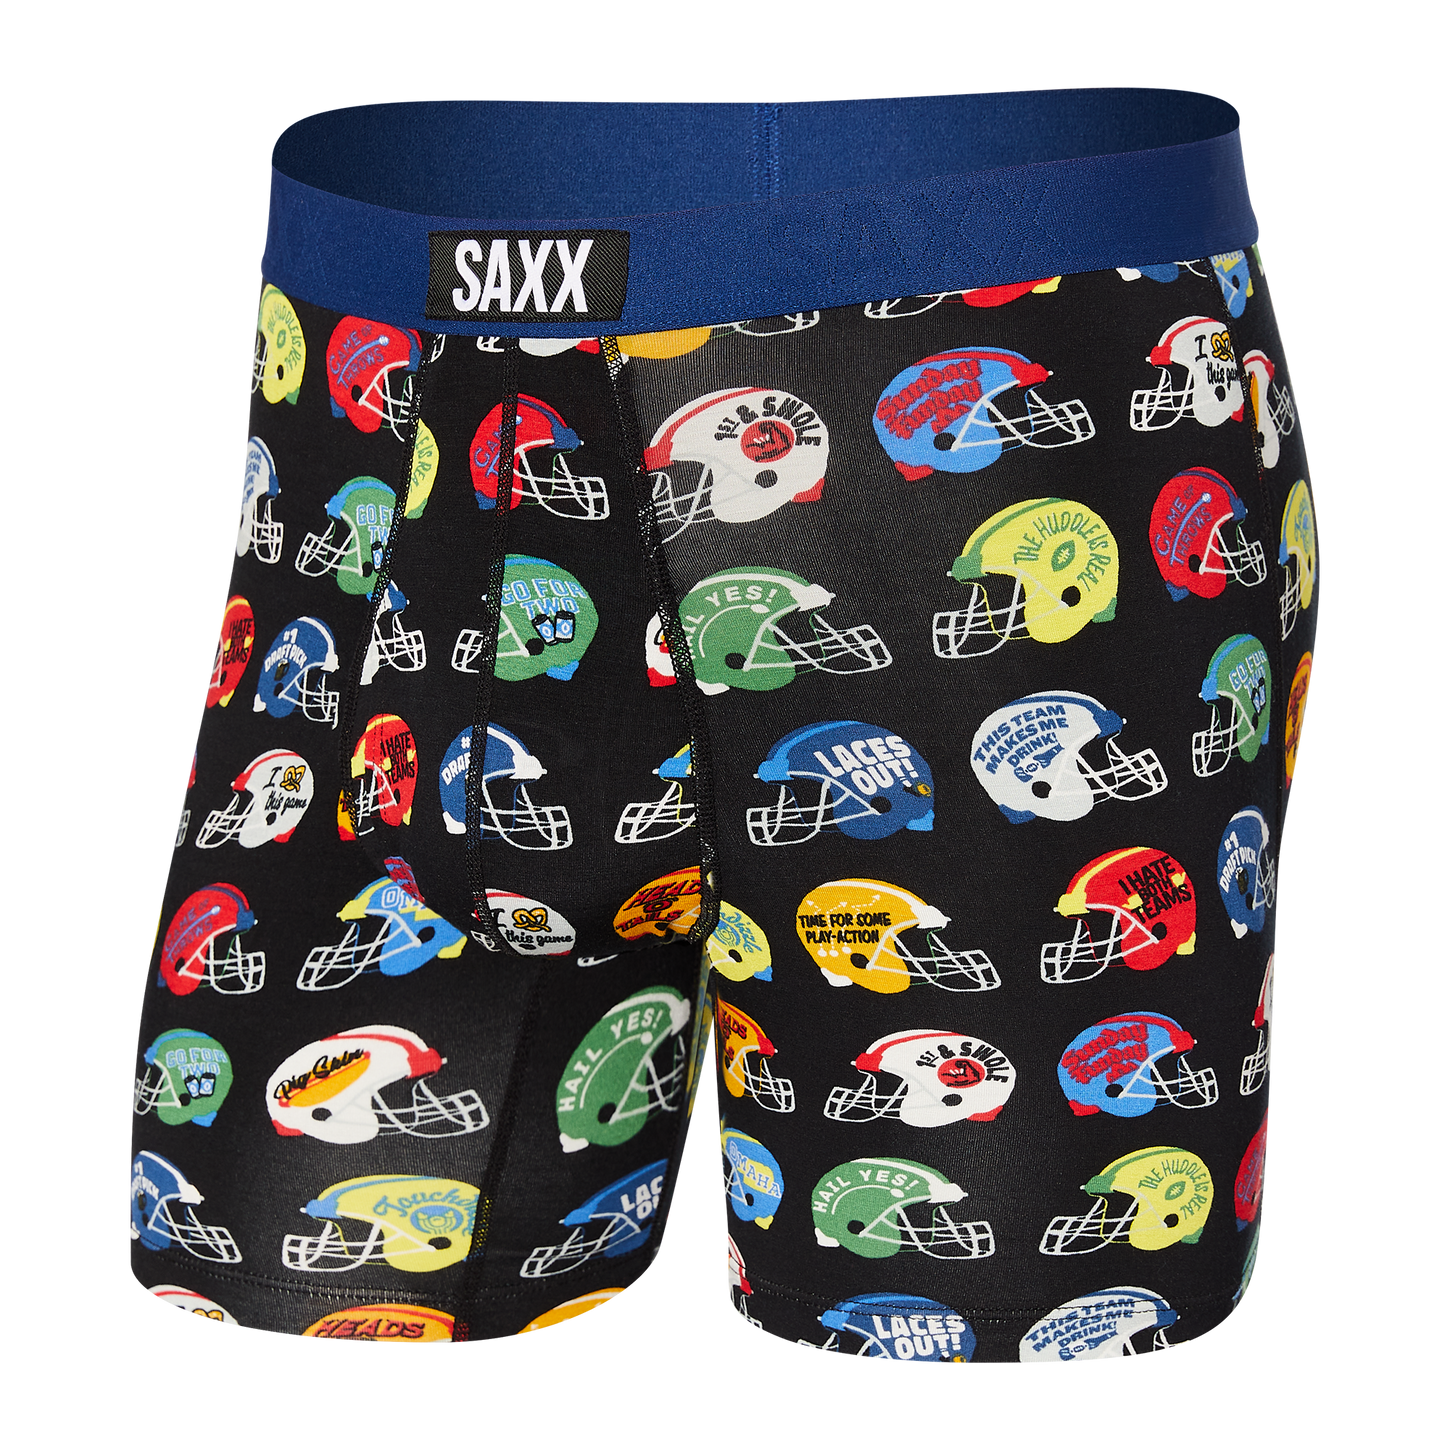 Saxx Underwear Platinum Boxer Brief #SXBB42F - In the Mood Intimates